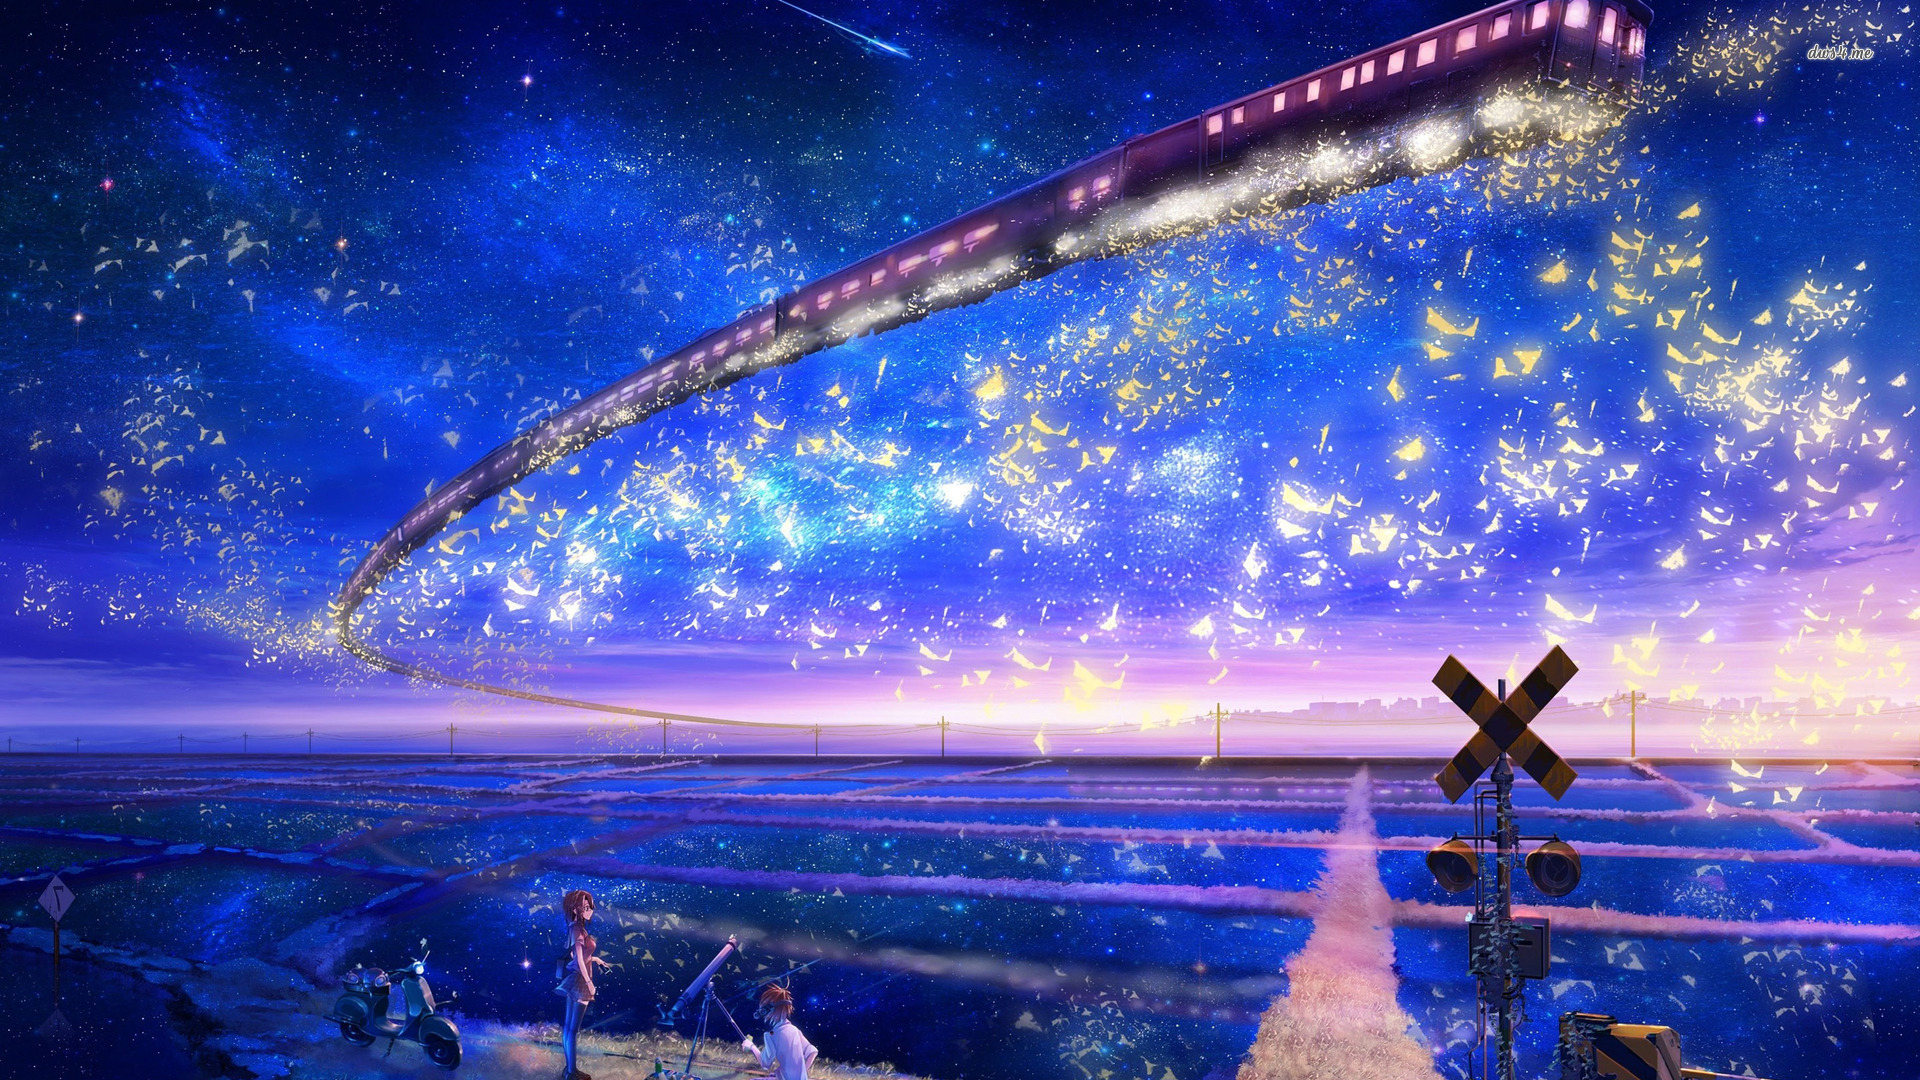 Anime Night Sky Background - 1920x1080 Wallpaper 